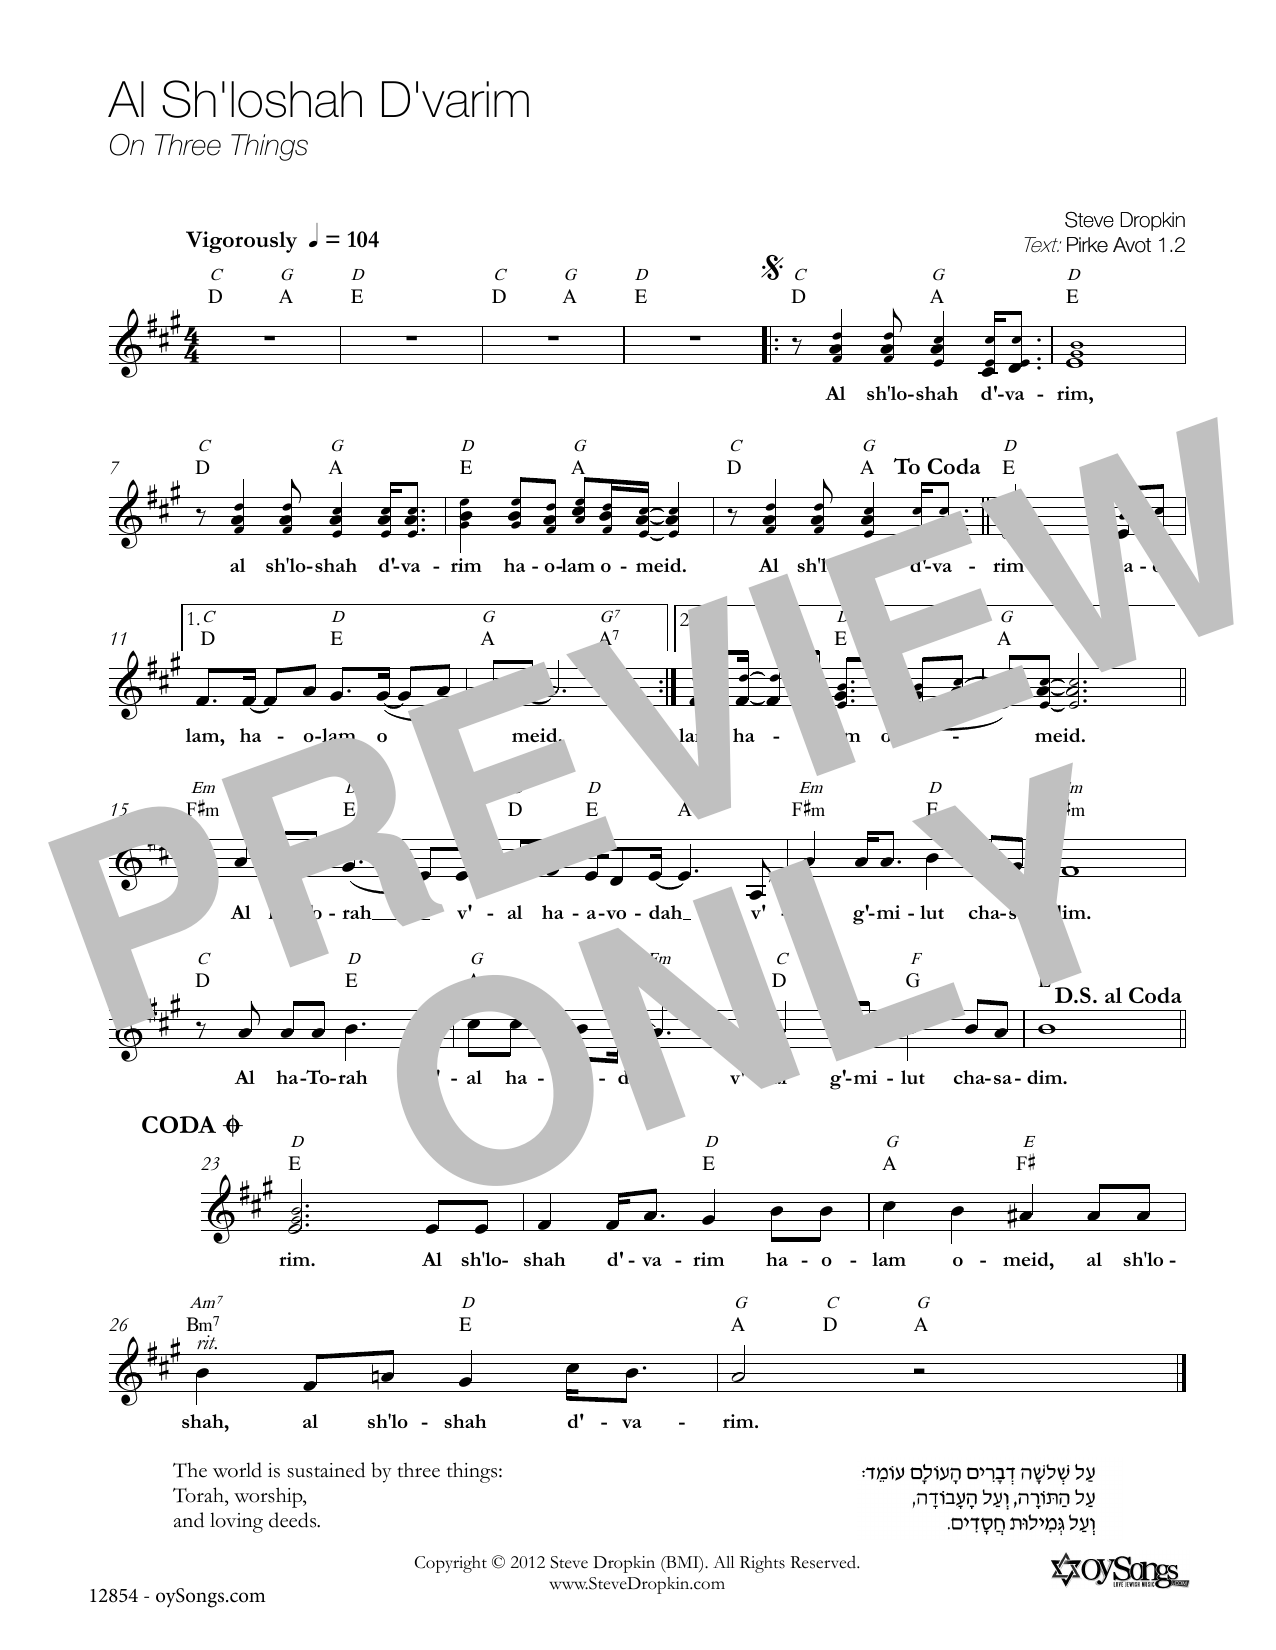 Steve Dropkin Al Shloshah D'varim Sheet Music Notes & Chords for Melody Line, Lyrics & Chords - Download or Print PDF